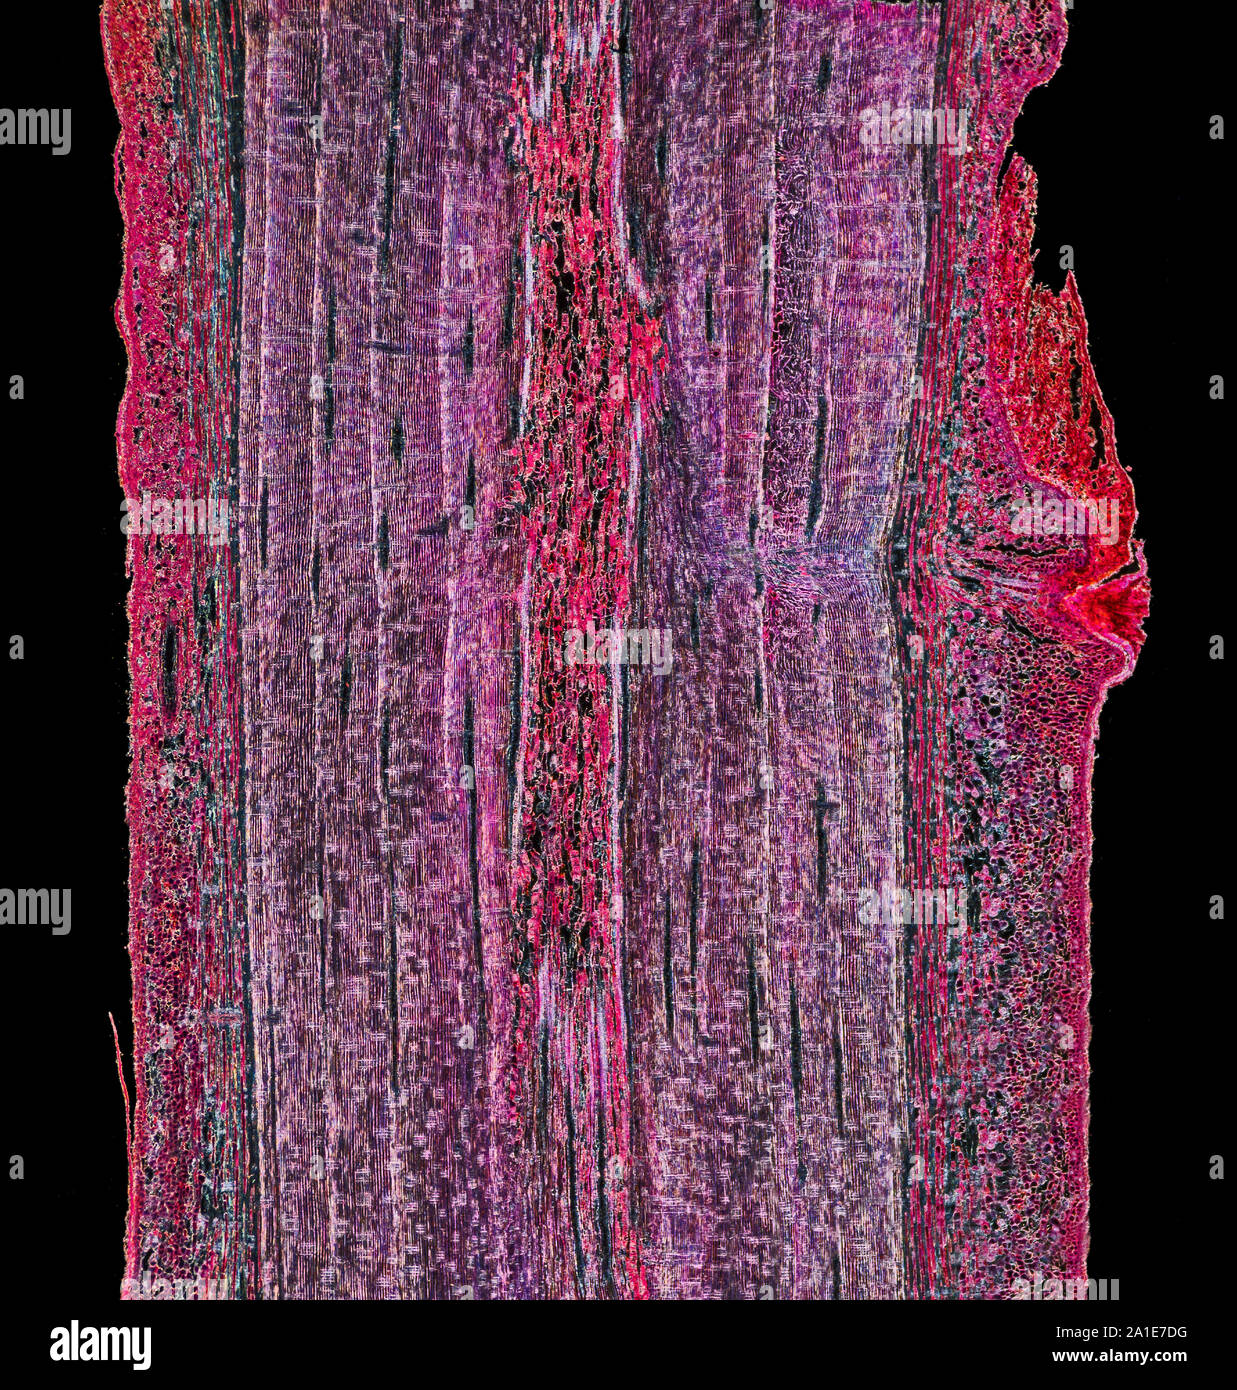 Pinus, alten Stammes RLS, dunkelfeld Beleuchtung photomicrograph Stockfoto